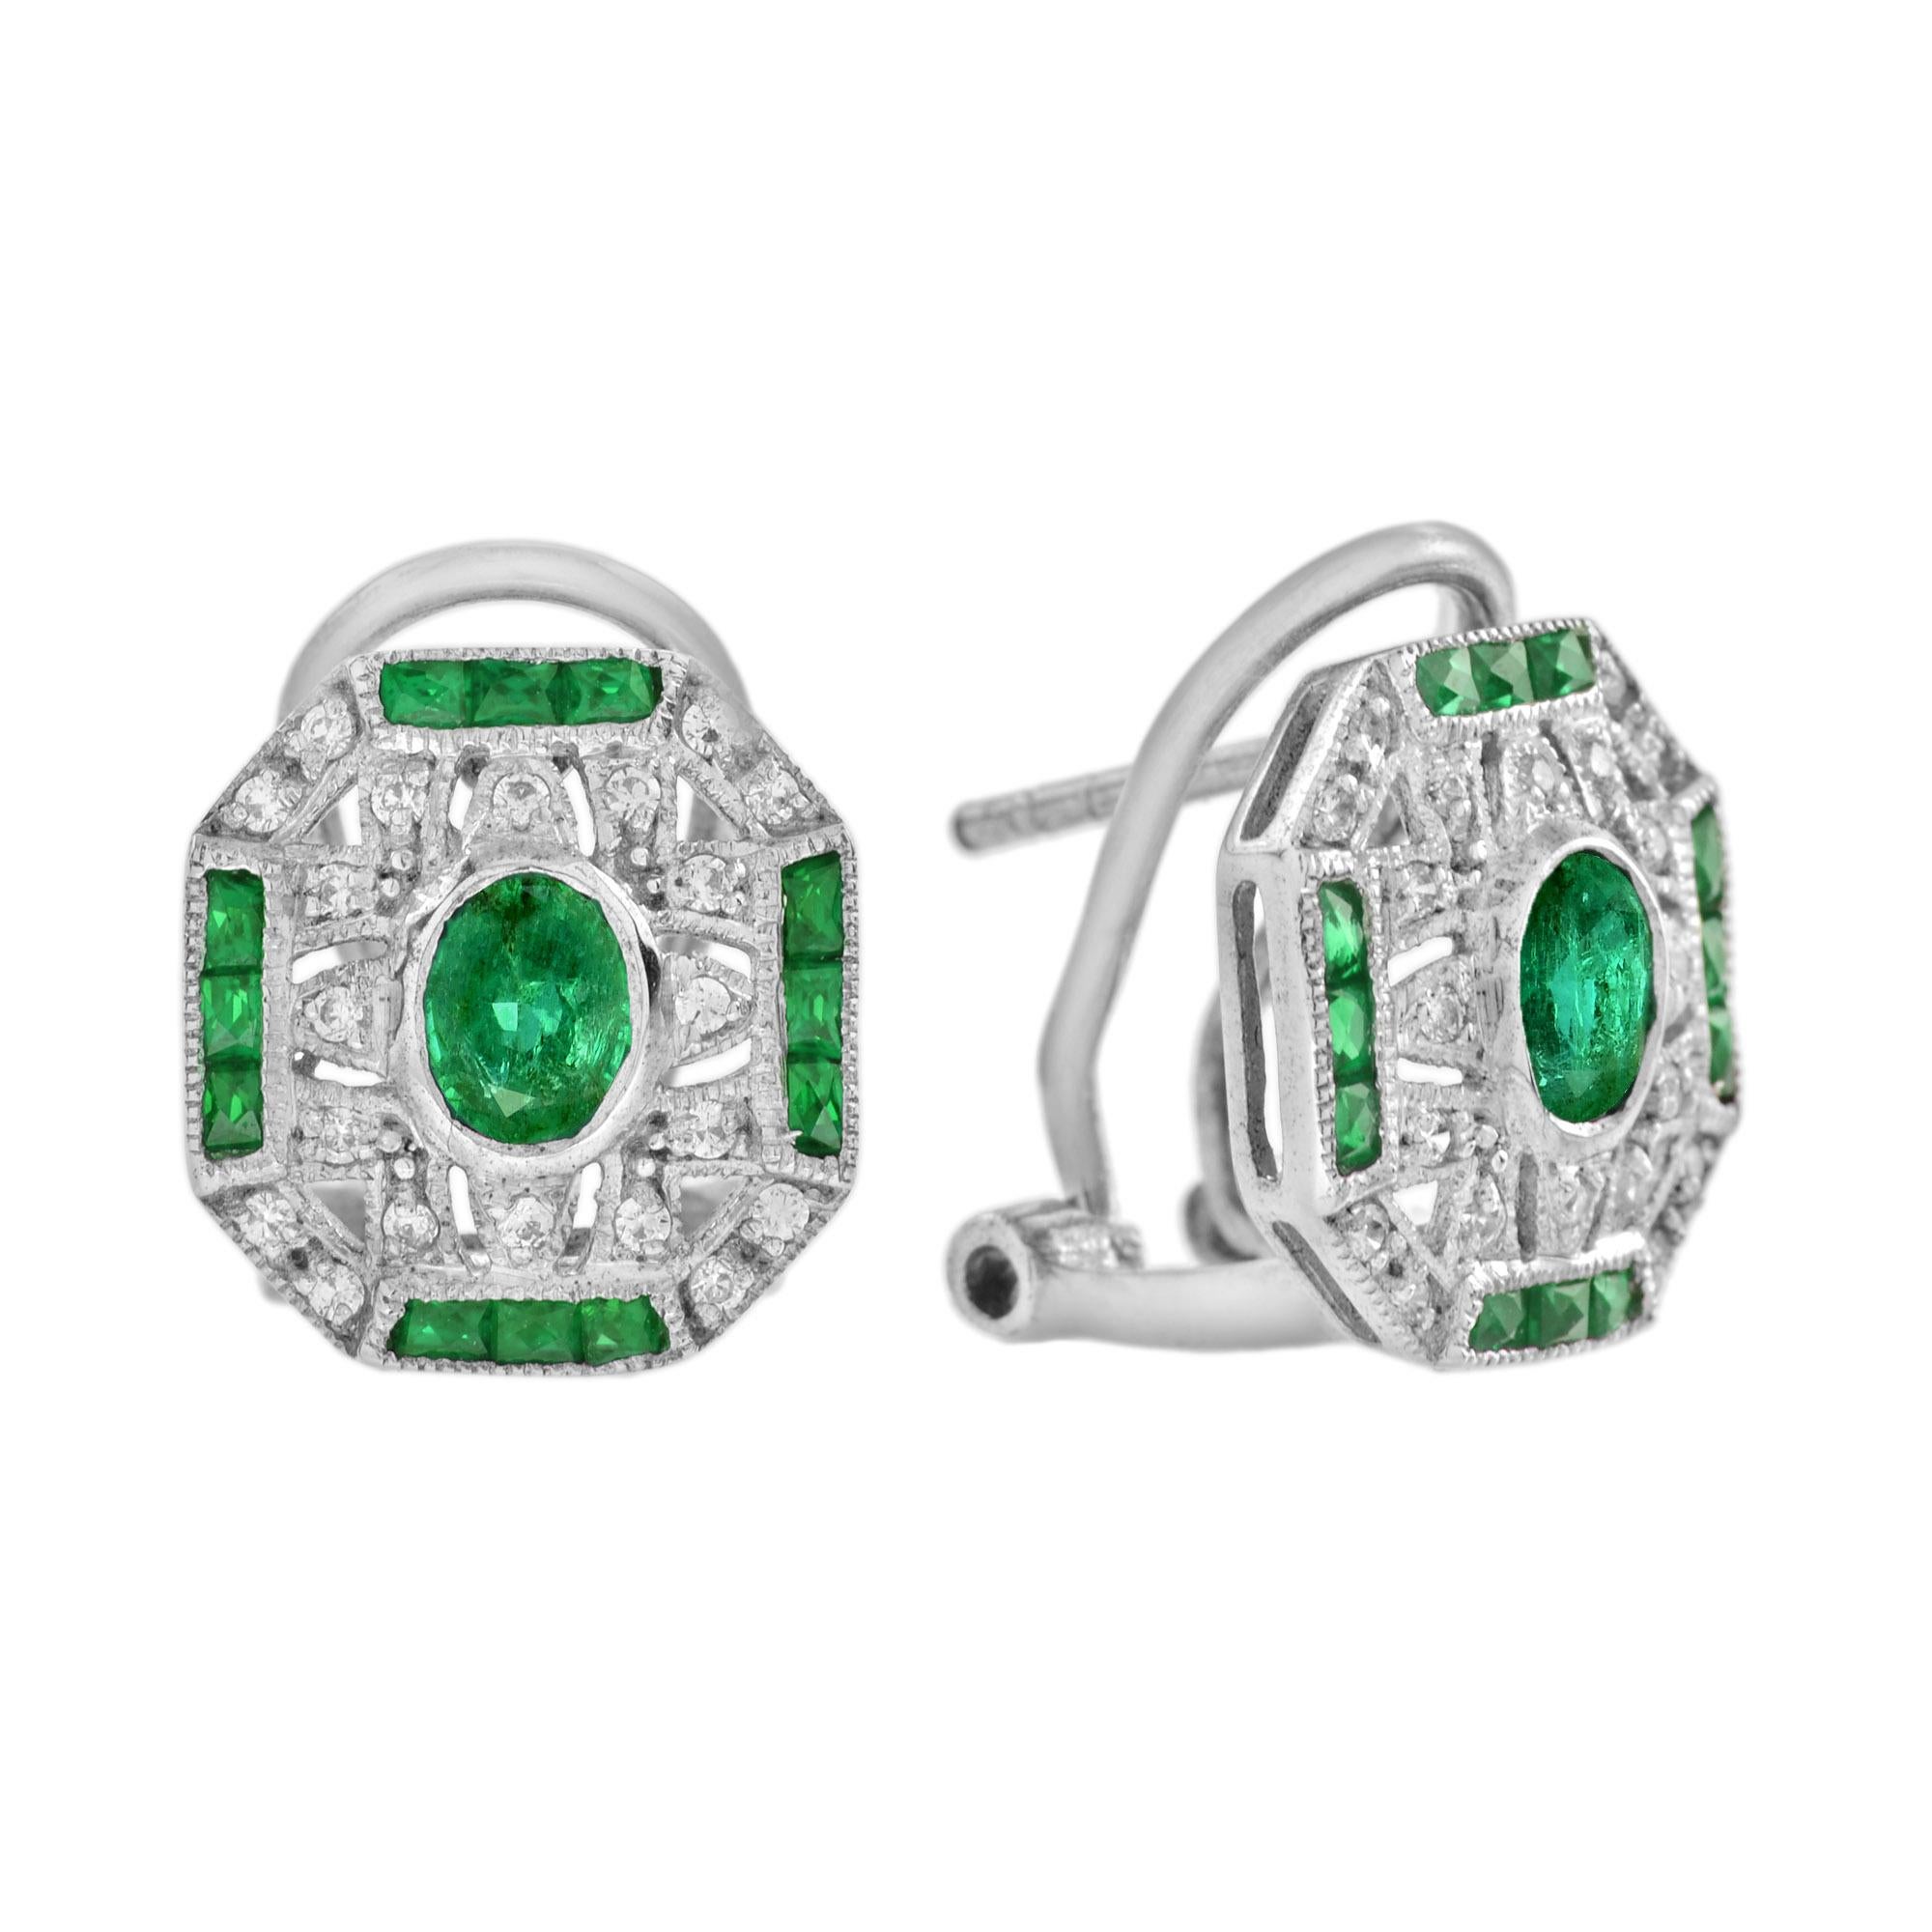 Emerald and Diamond Art Deco Style Omega Earrings in 18K White Gold